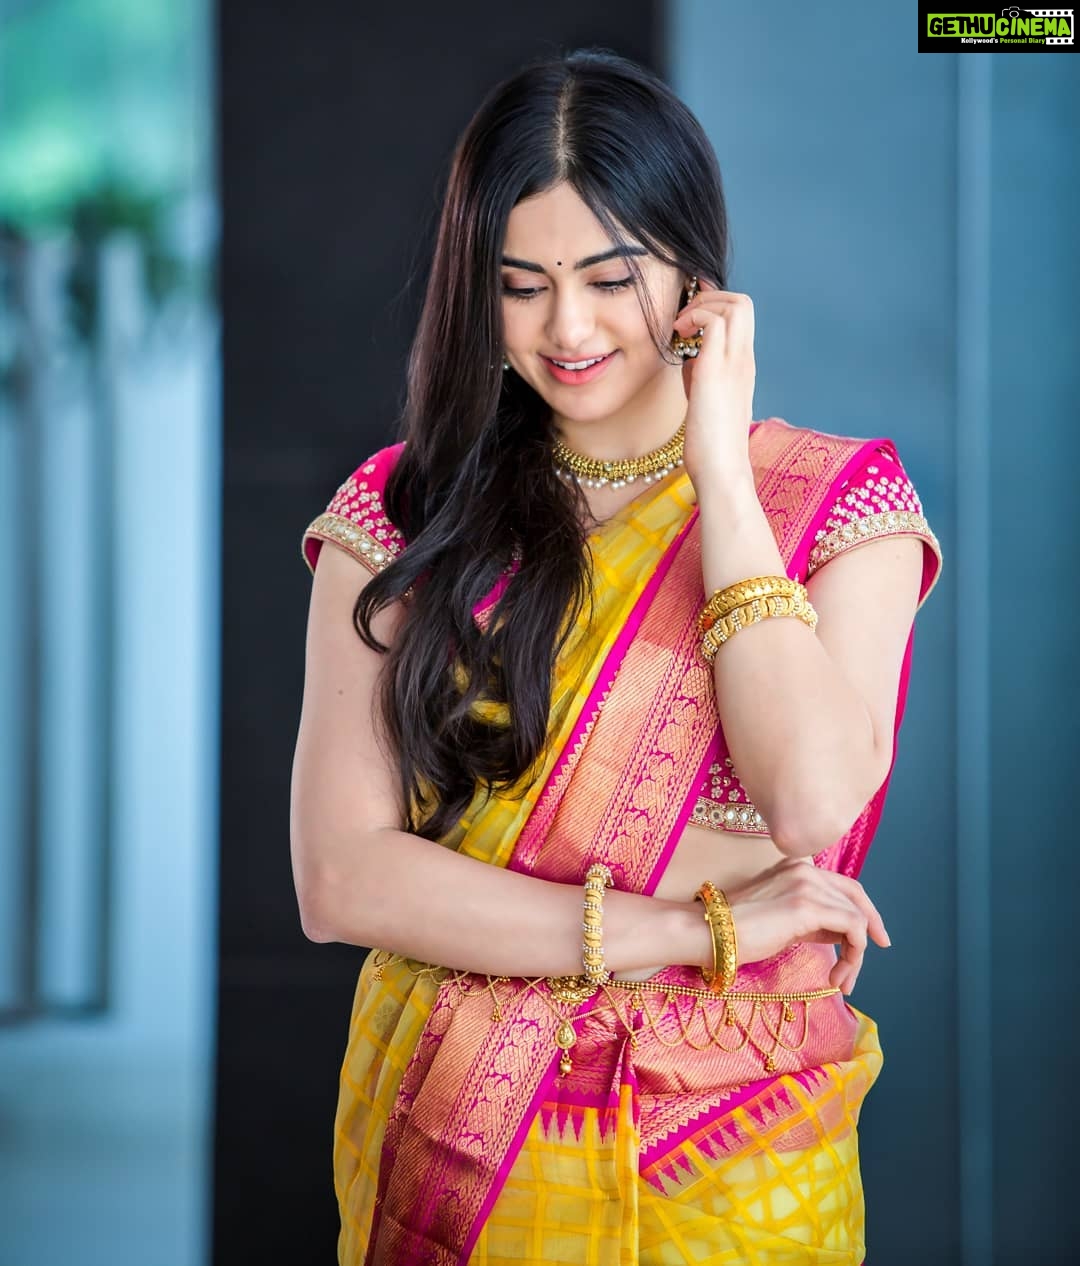 Adah Sharma Xxx - Actress Adah Sharma Instagram Photos and Posts May 2019 - Gethu Cinema